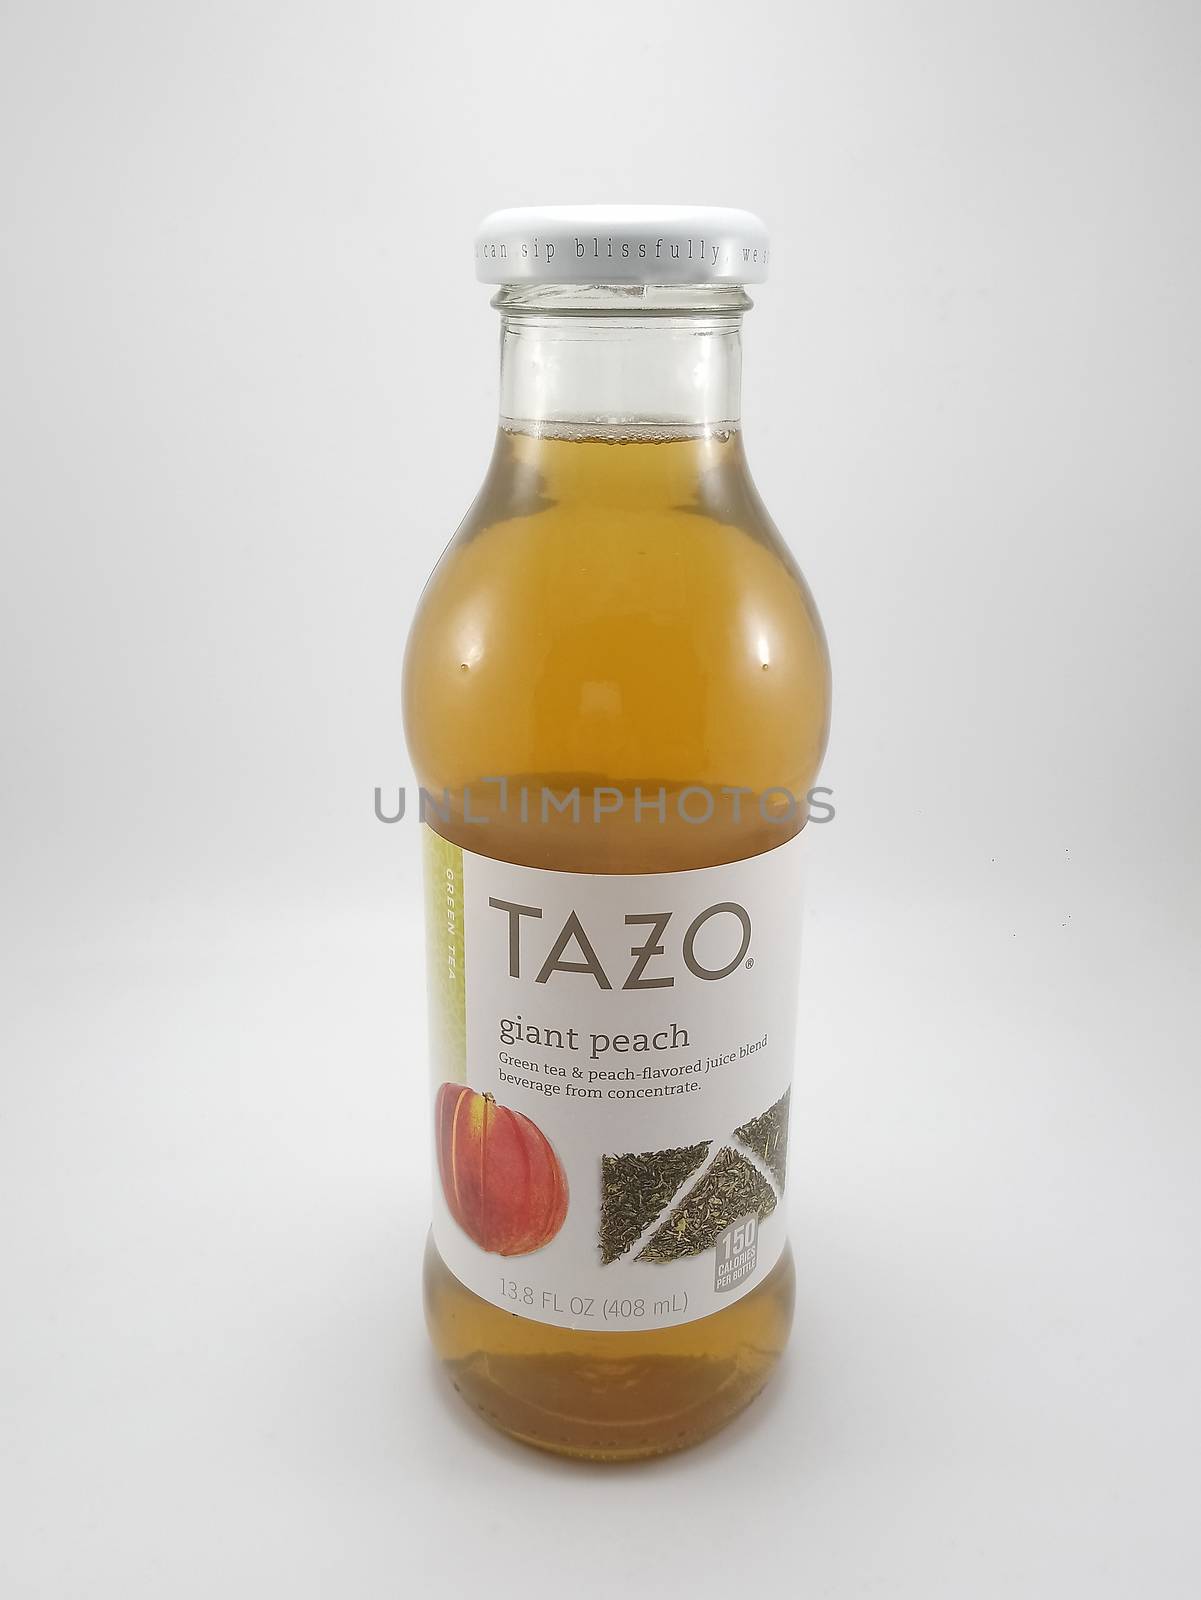 Tazo giant peach green tea drink in Manila, Philippines by imwaltersy